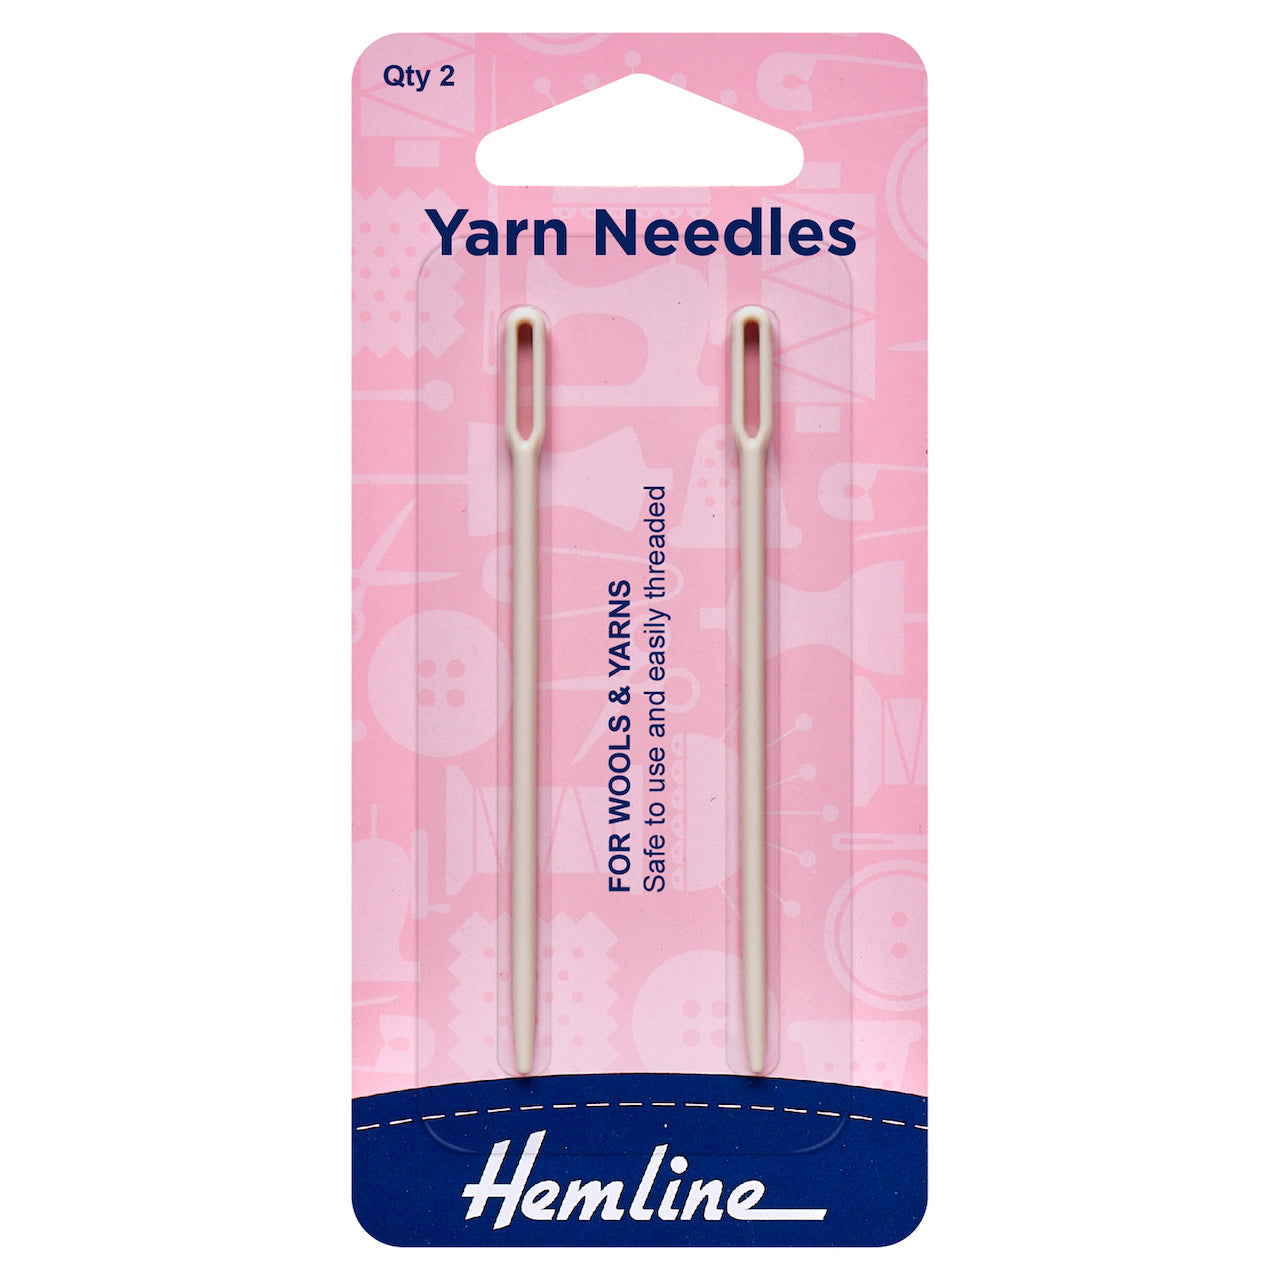 Hemline Plastic Yarn Needles